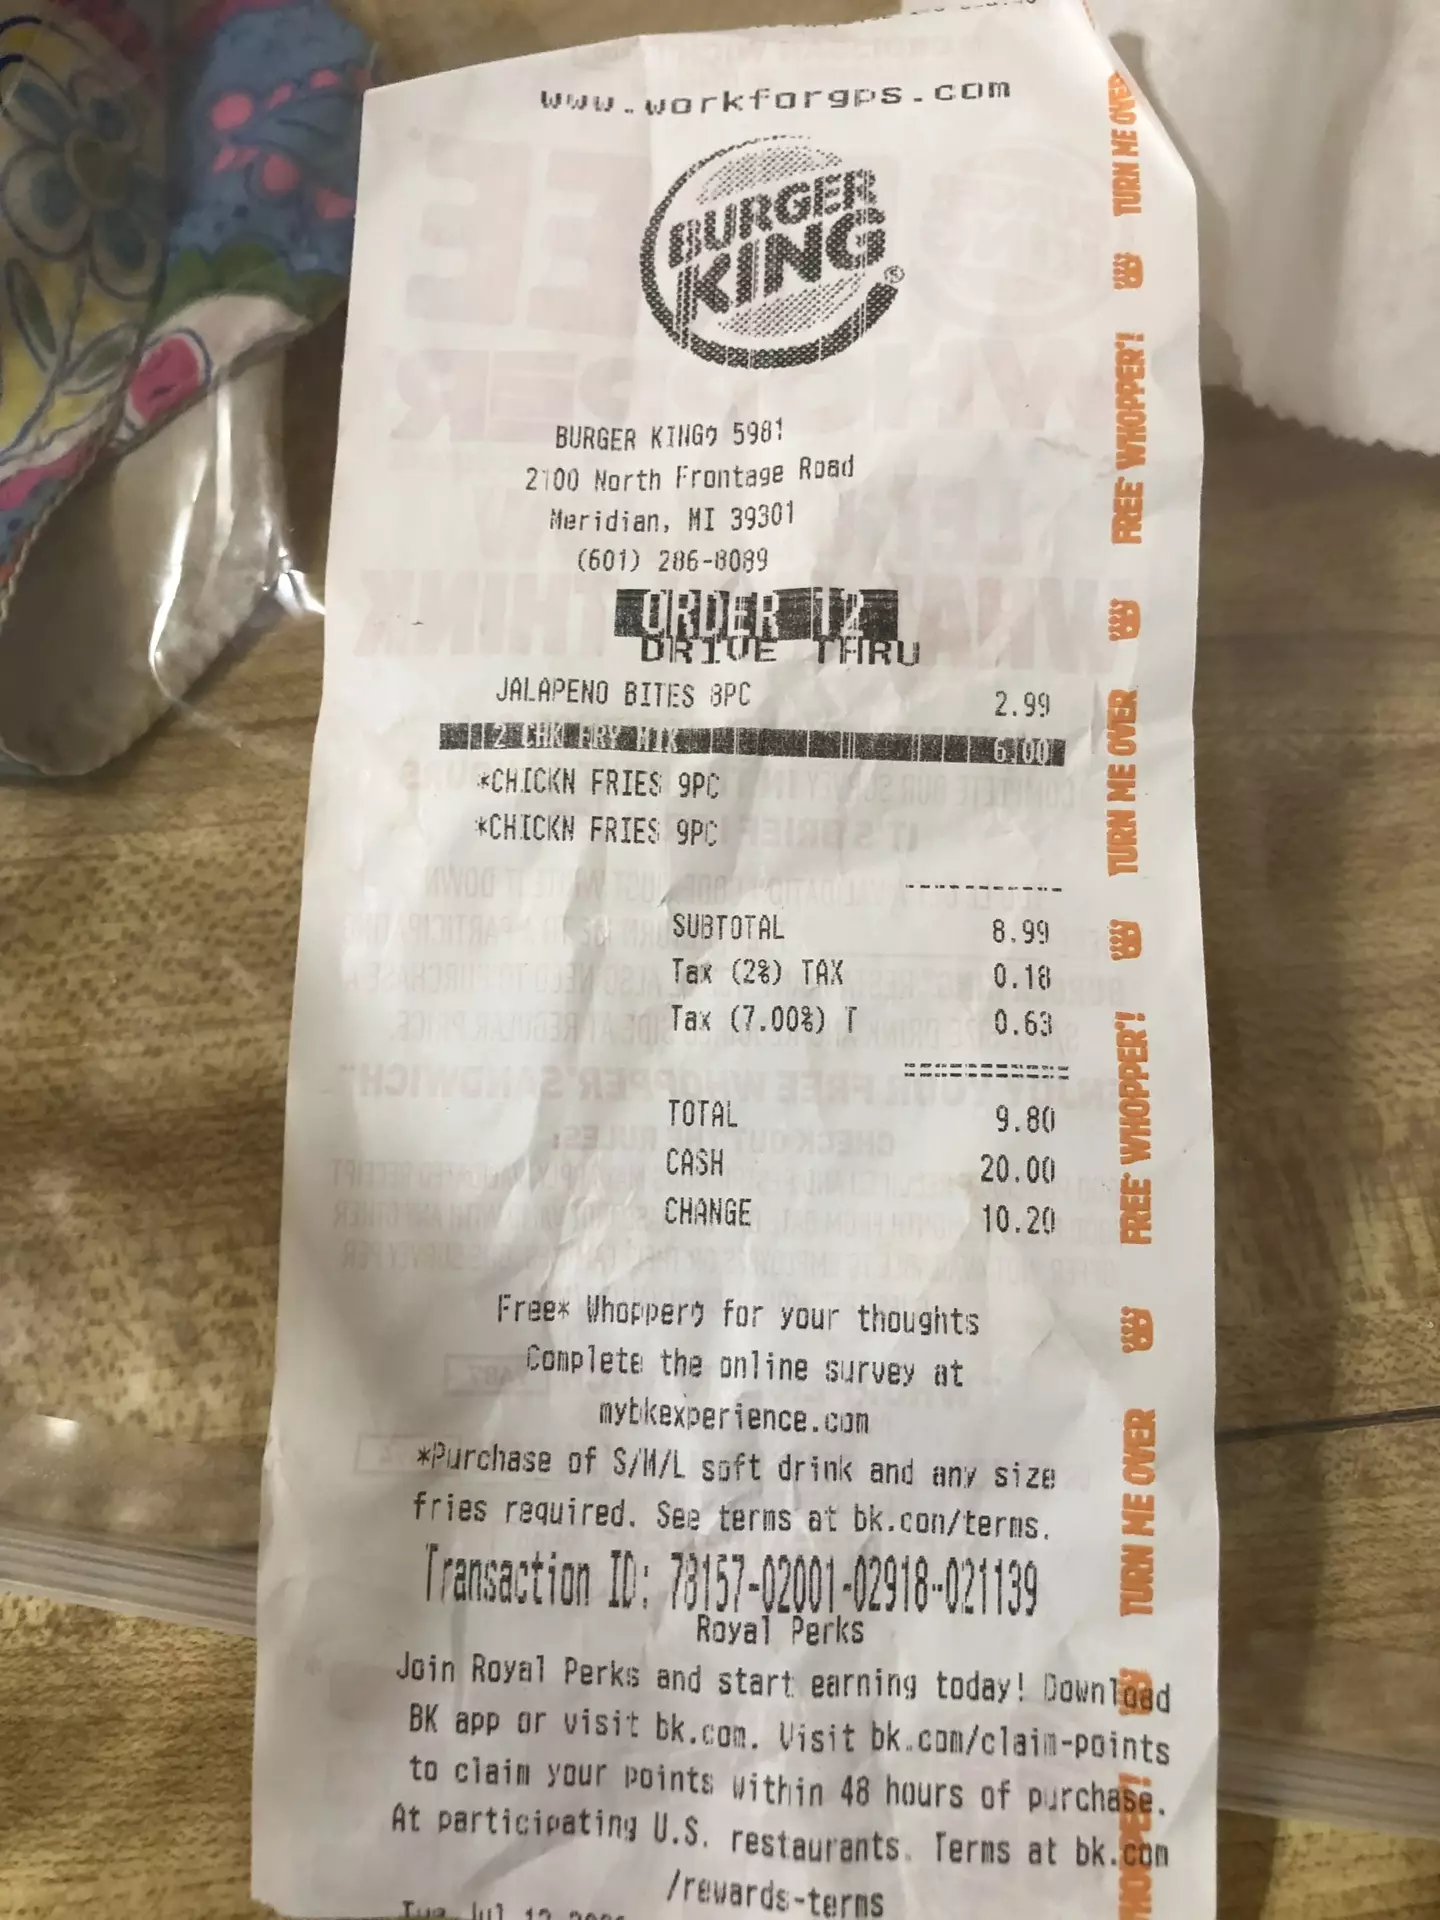 She kept the receipt as evidence.